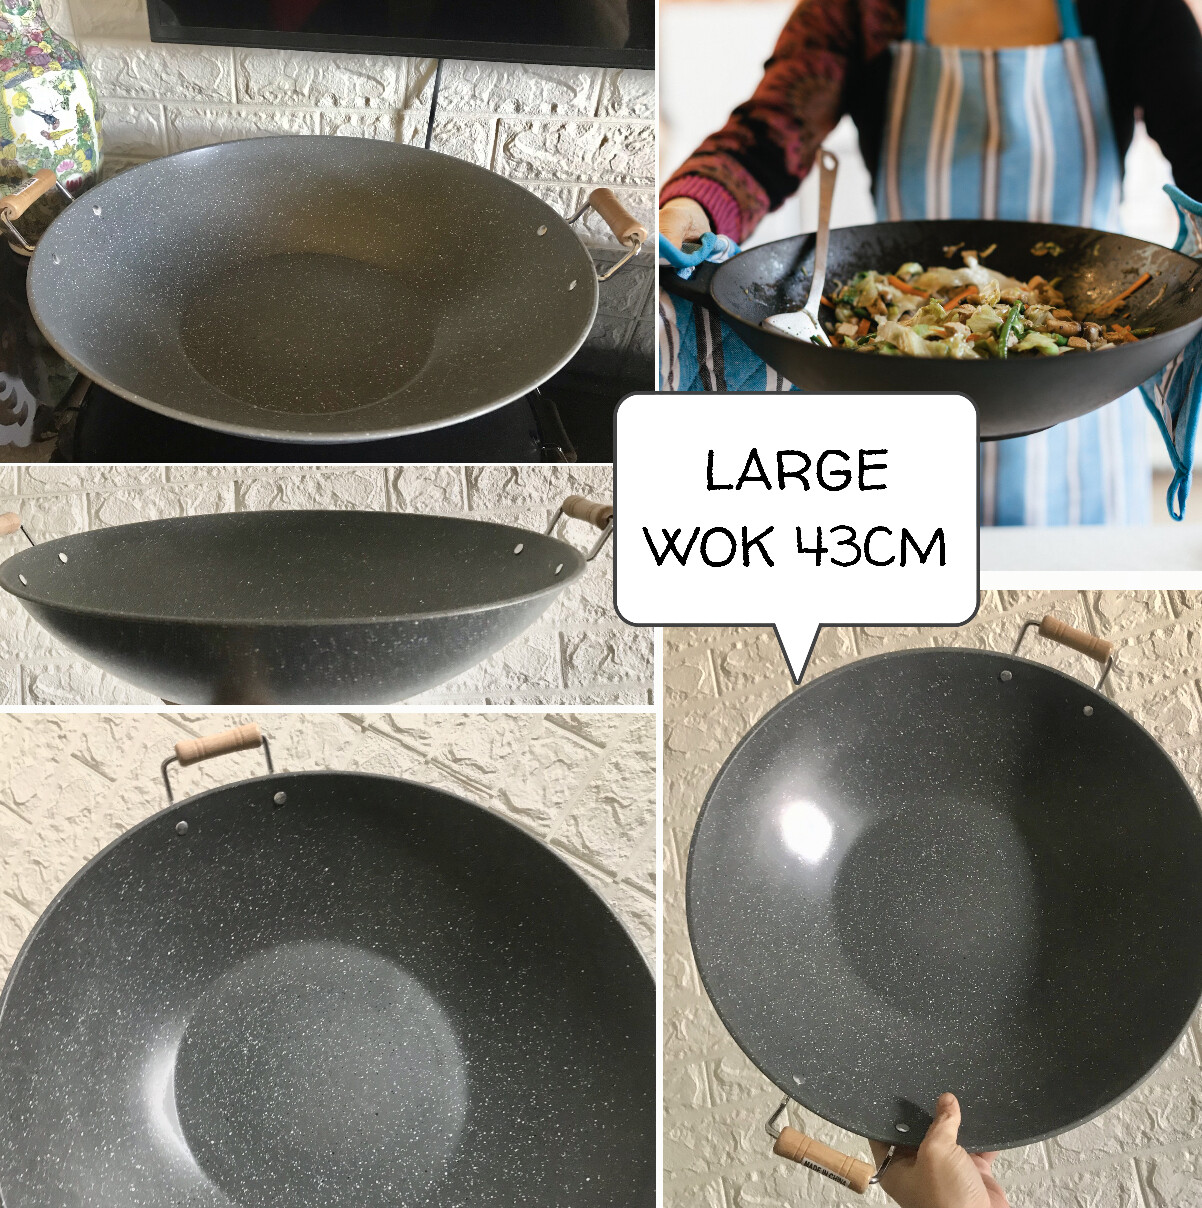 Large Wok 43cm